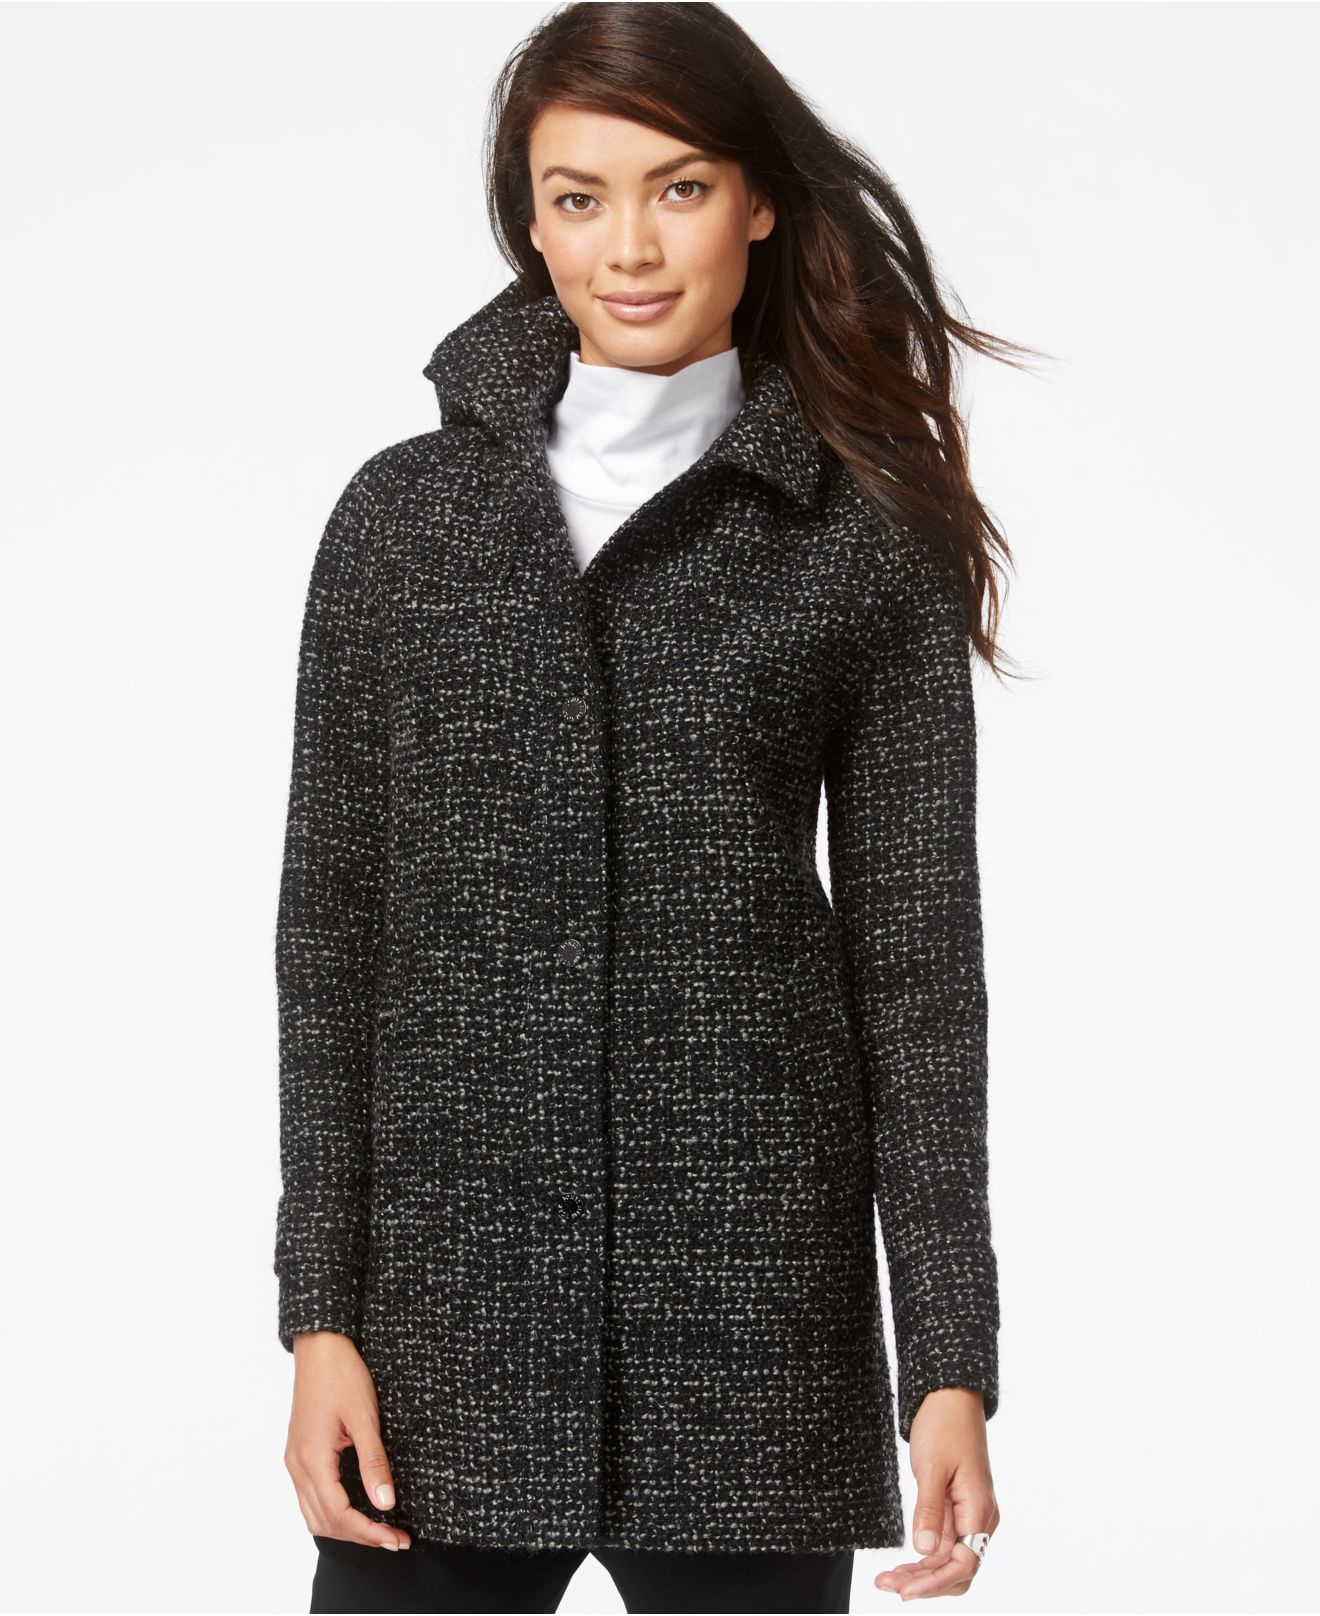 Jones New York Hooded Coat in Black - Lyst